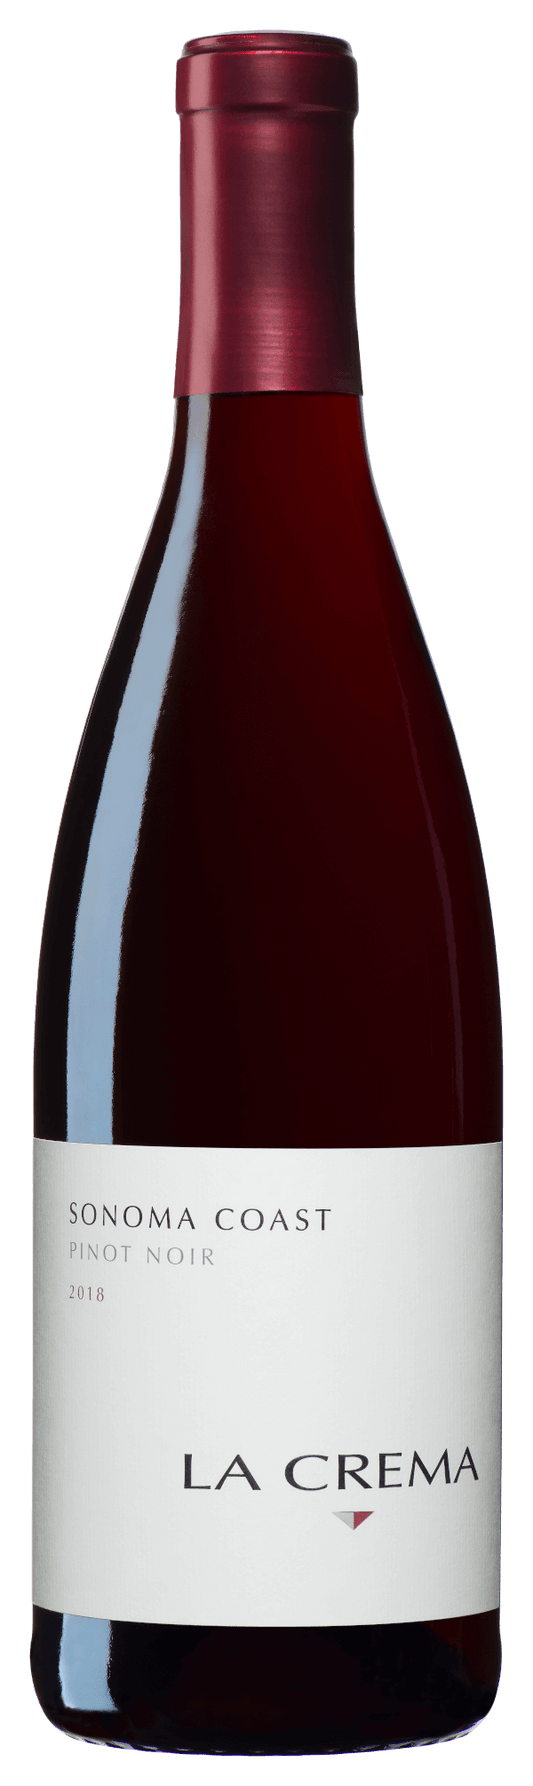 La Crema Sonoma Coast Pinot Noir 2018 (1x75cl) - TwoMoreGlasses.com